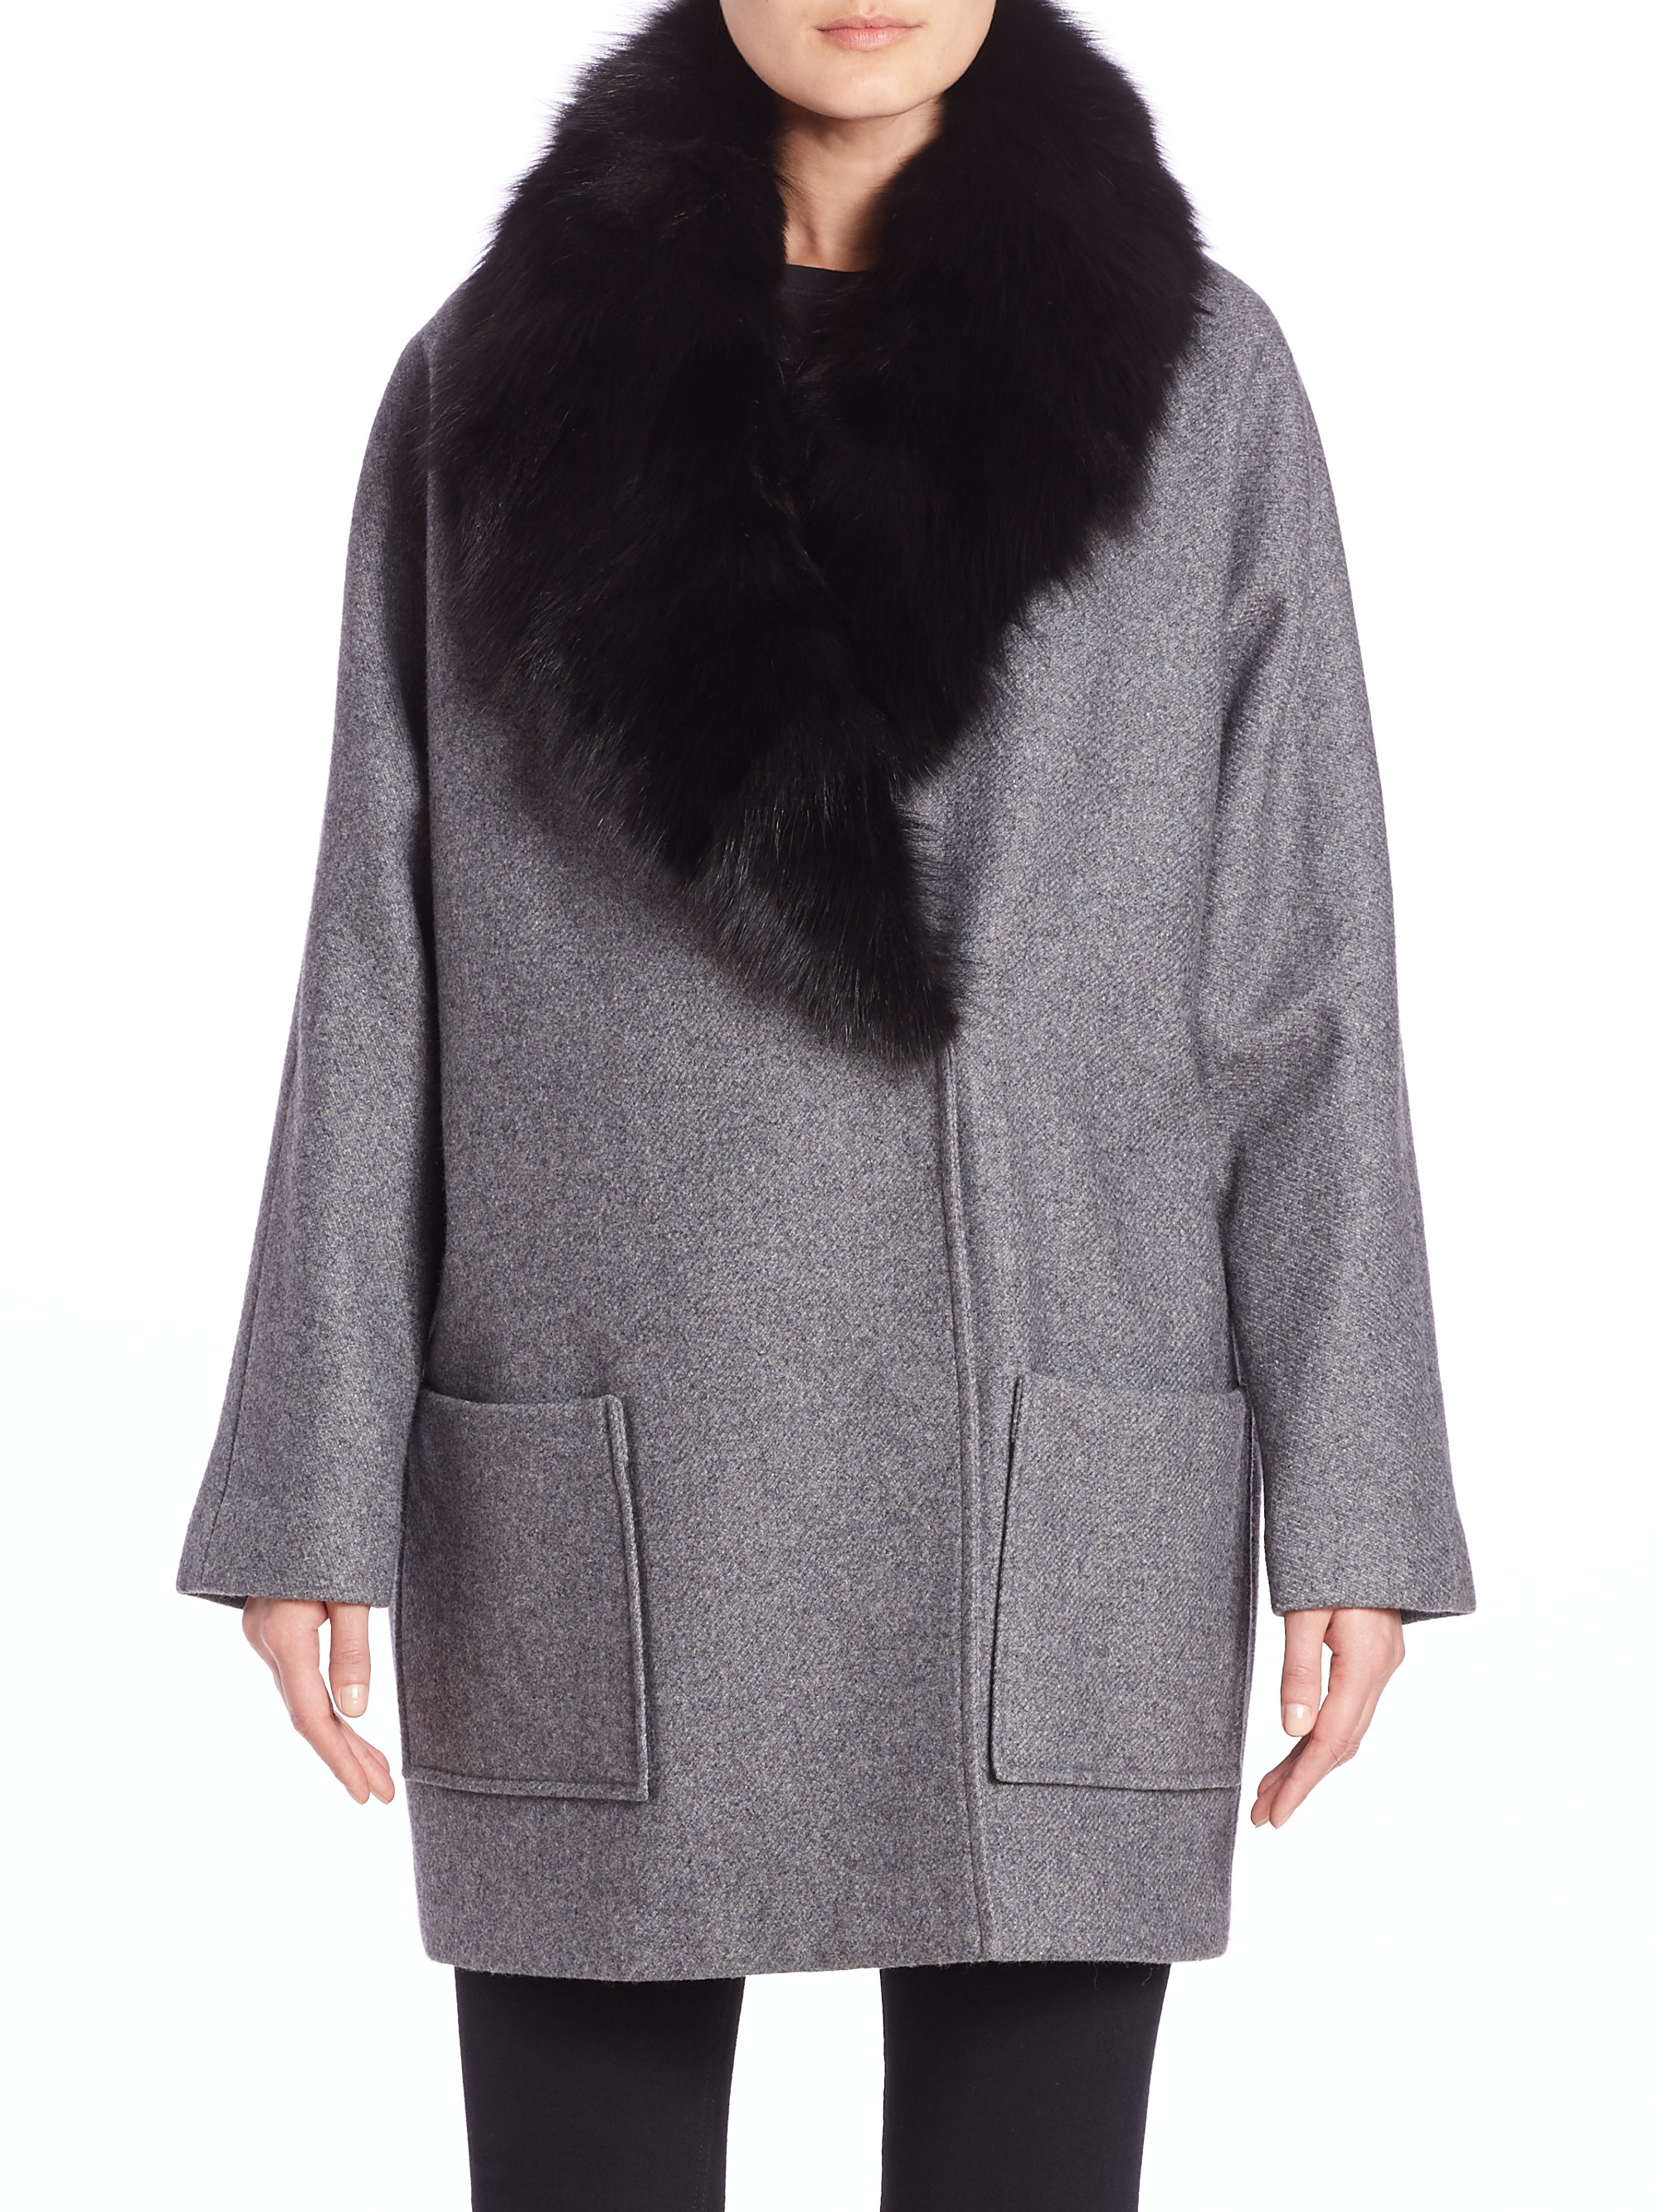 Andrew marc Carine Fur-collar Cocoon Coat in Gray | Lyst